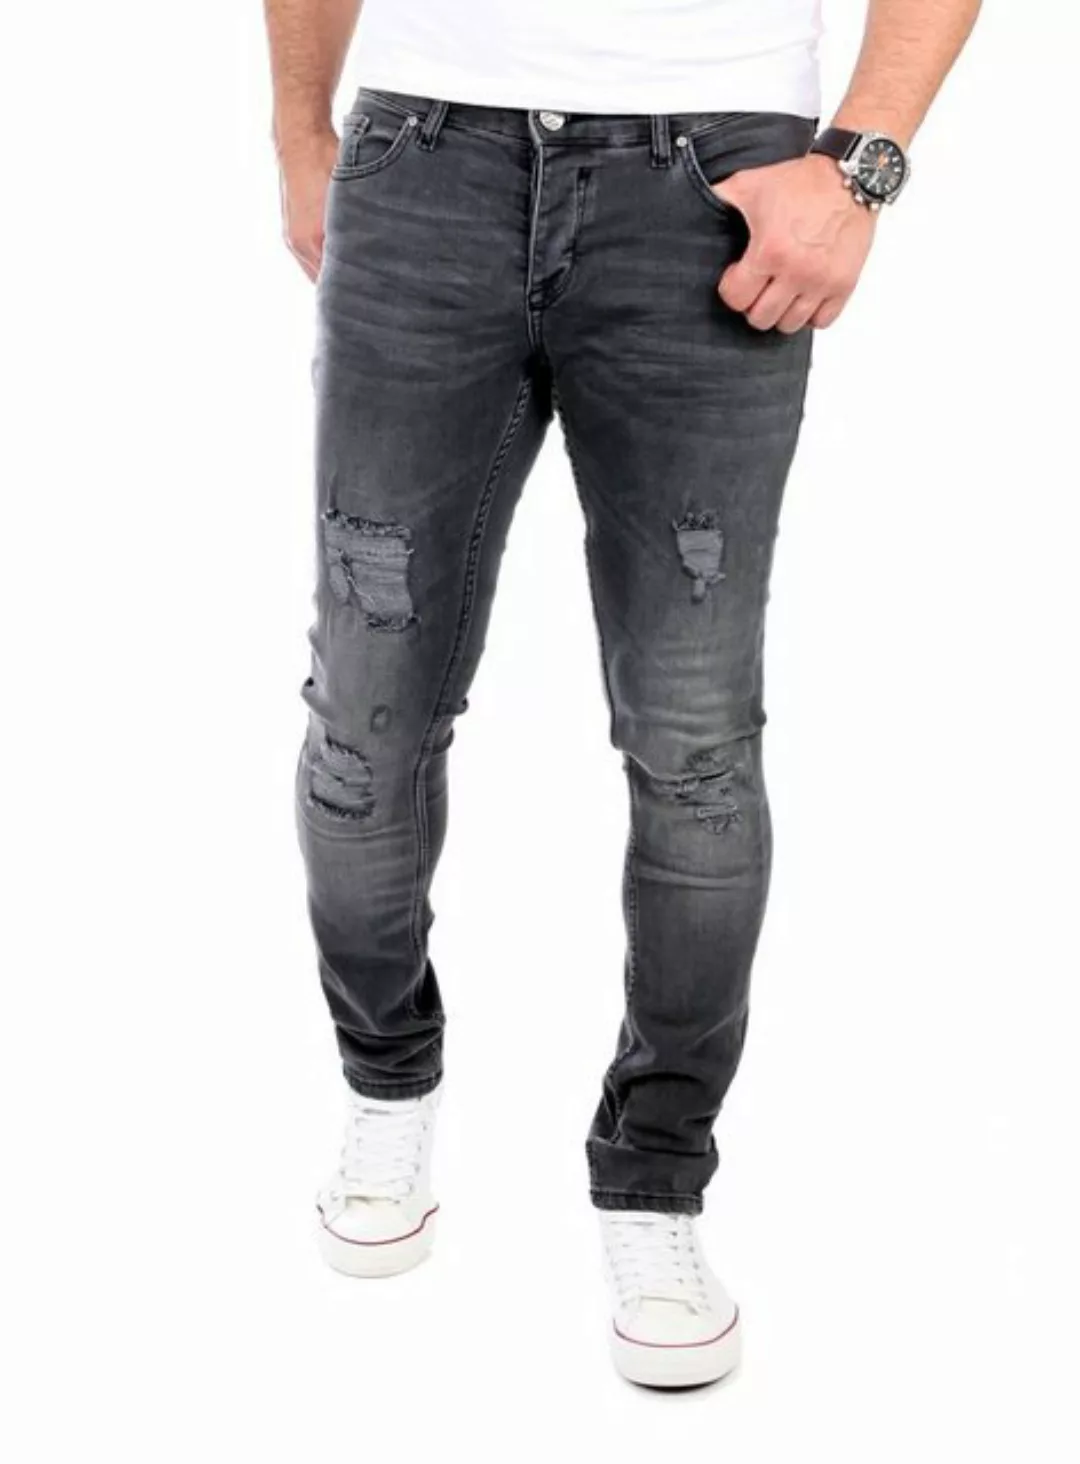 Reslad Destroyed-Jeans Reslad Jeans Herren Destroyed Look Slim Fit Denim St günstig online kaufen